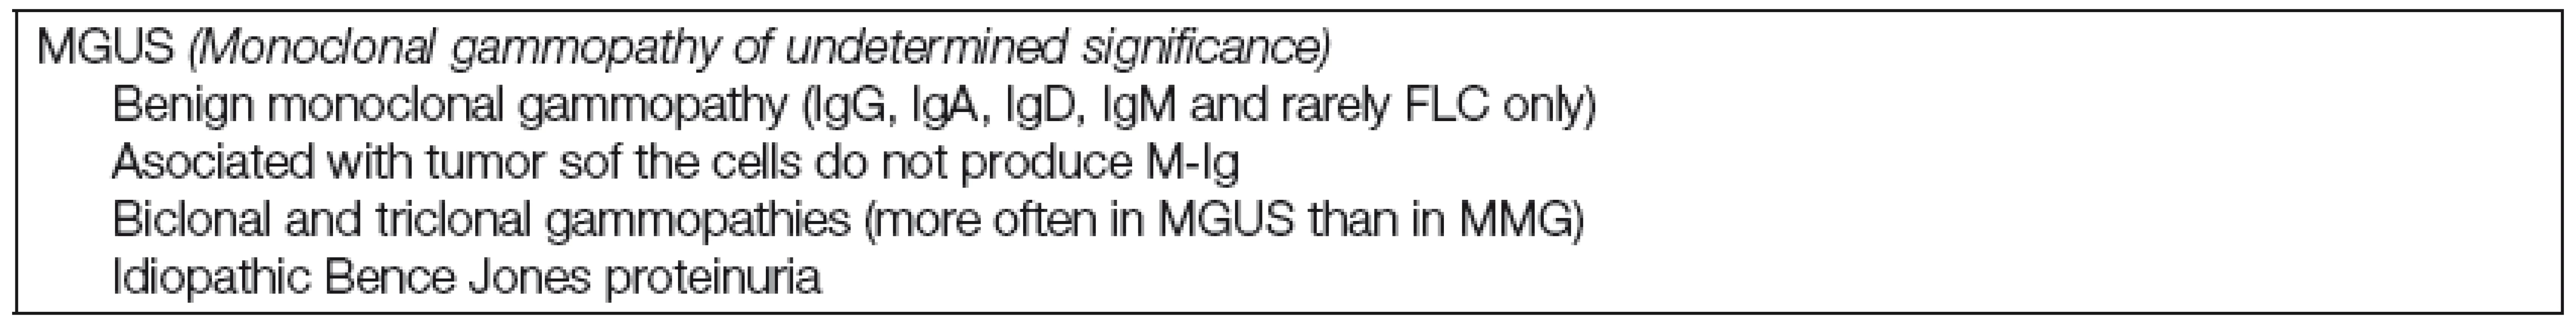 Basic classification of monoclonal gammopathies [3]